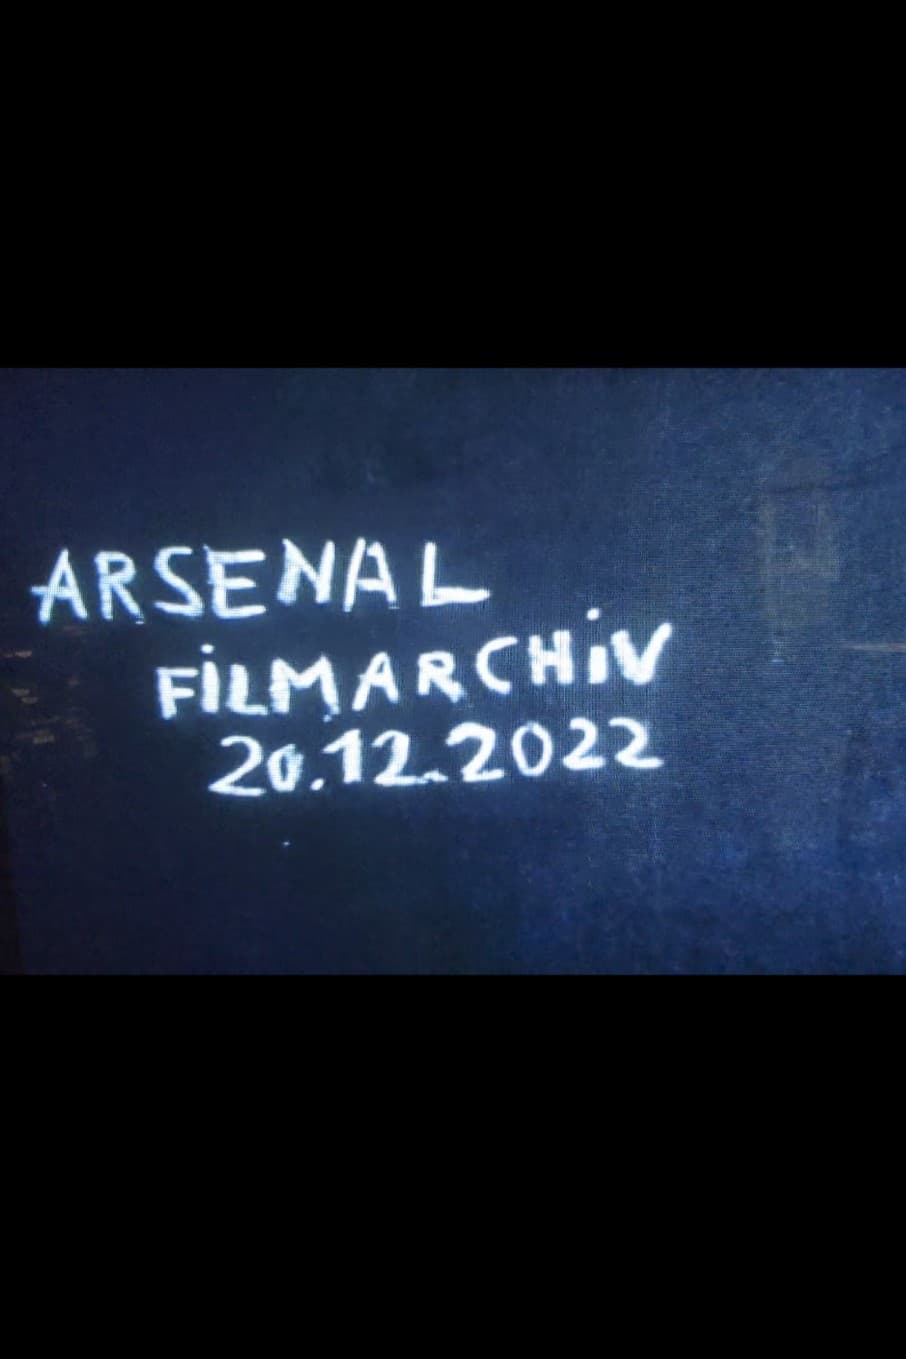 Arsenal Film Archive